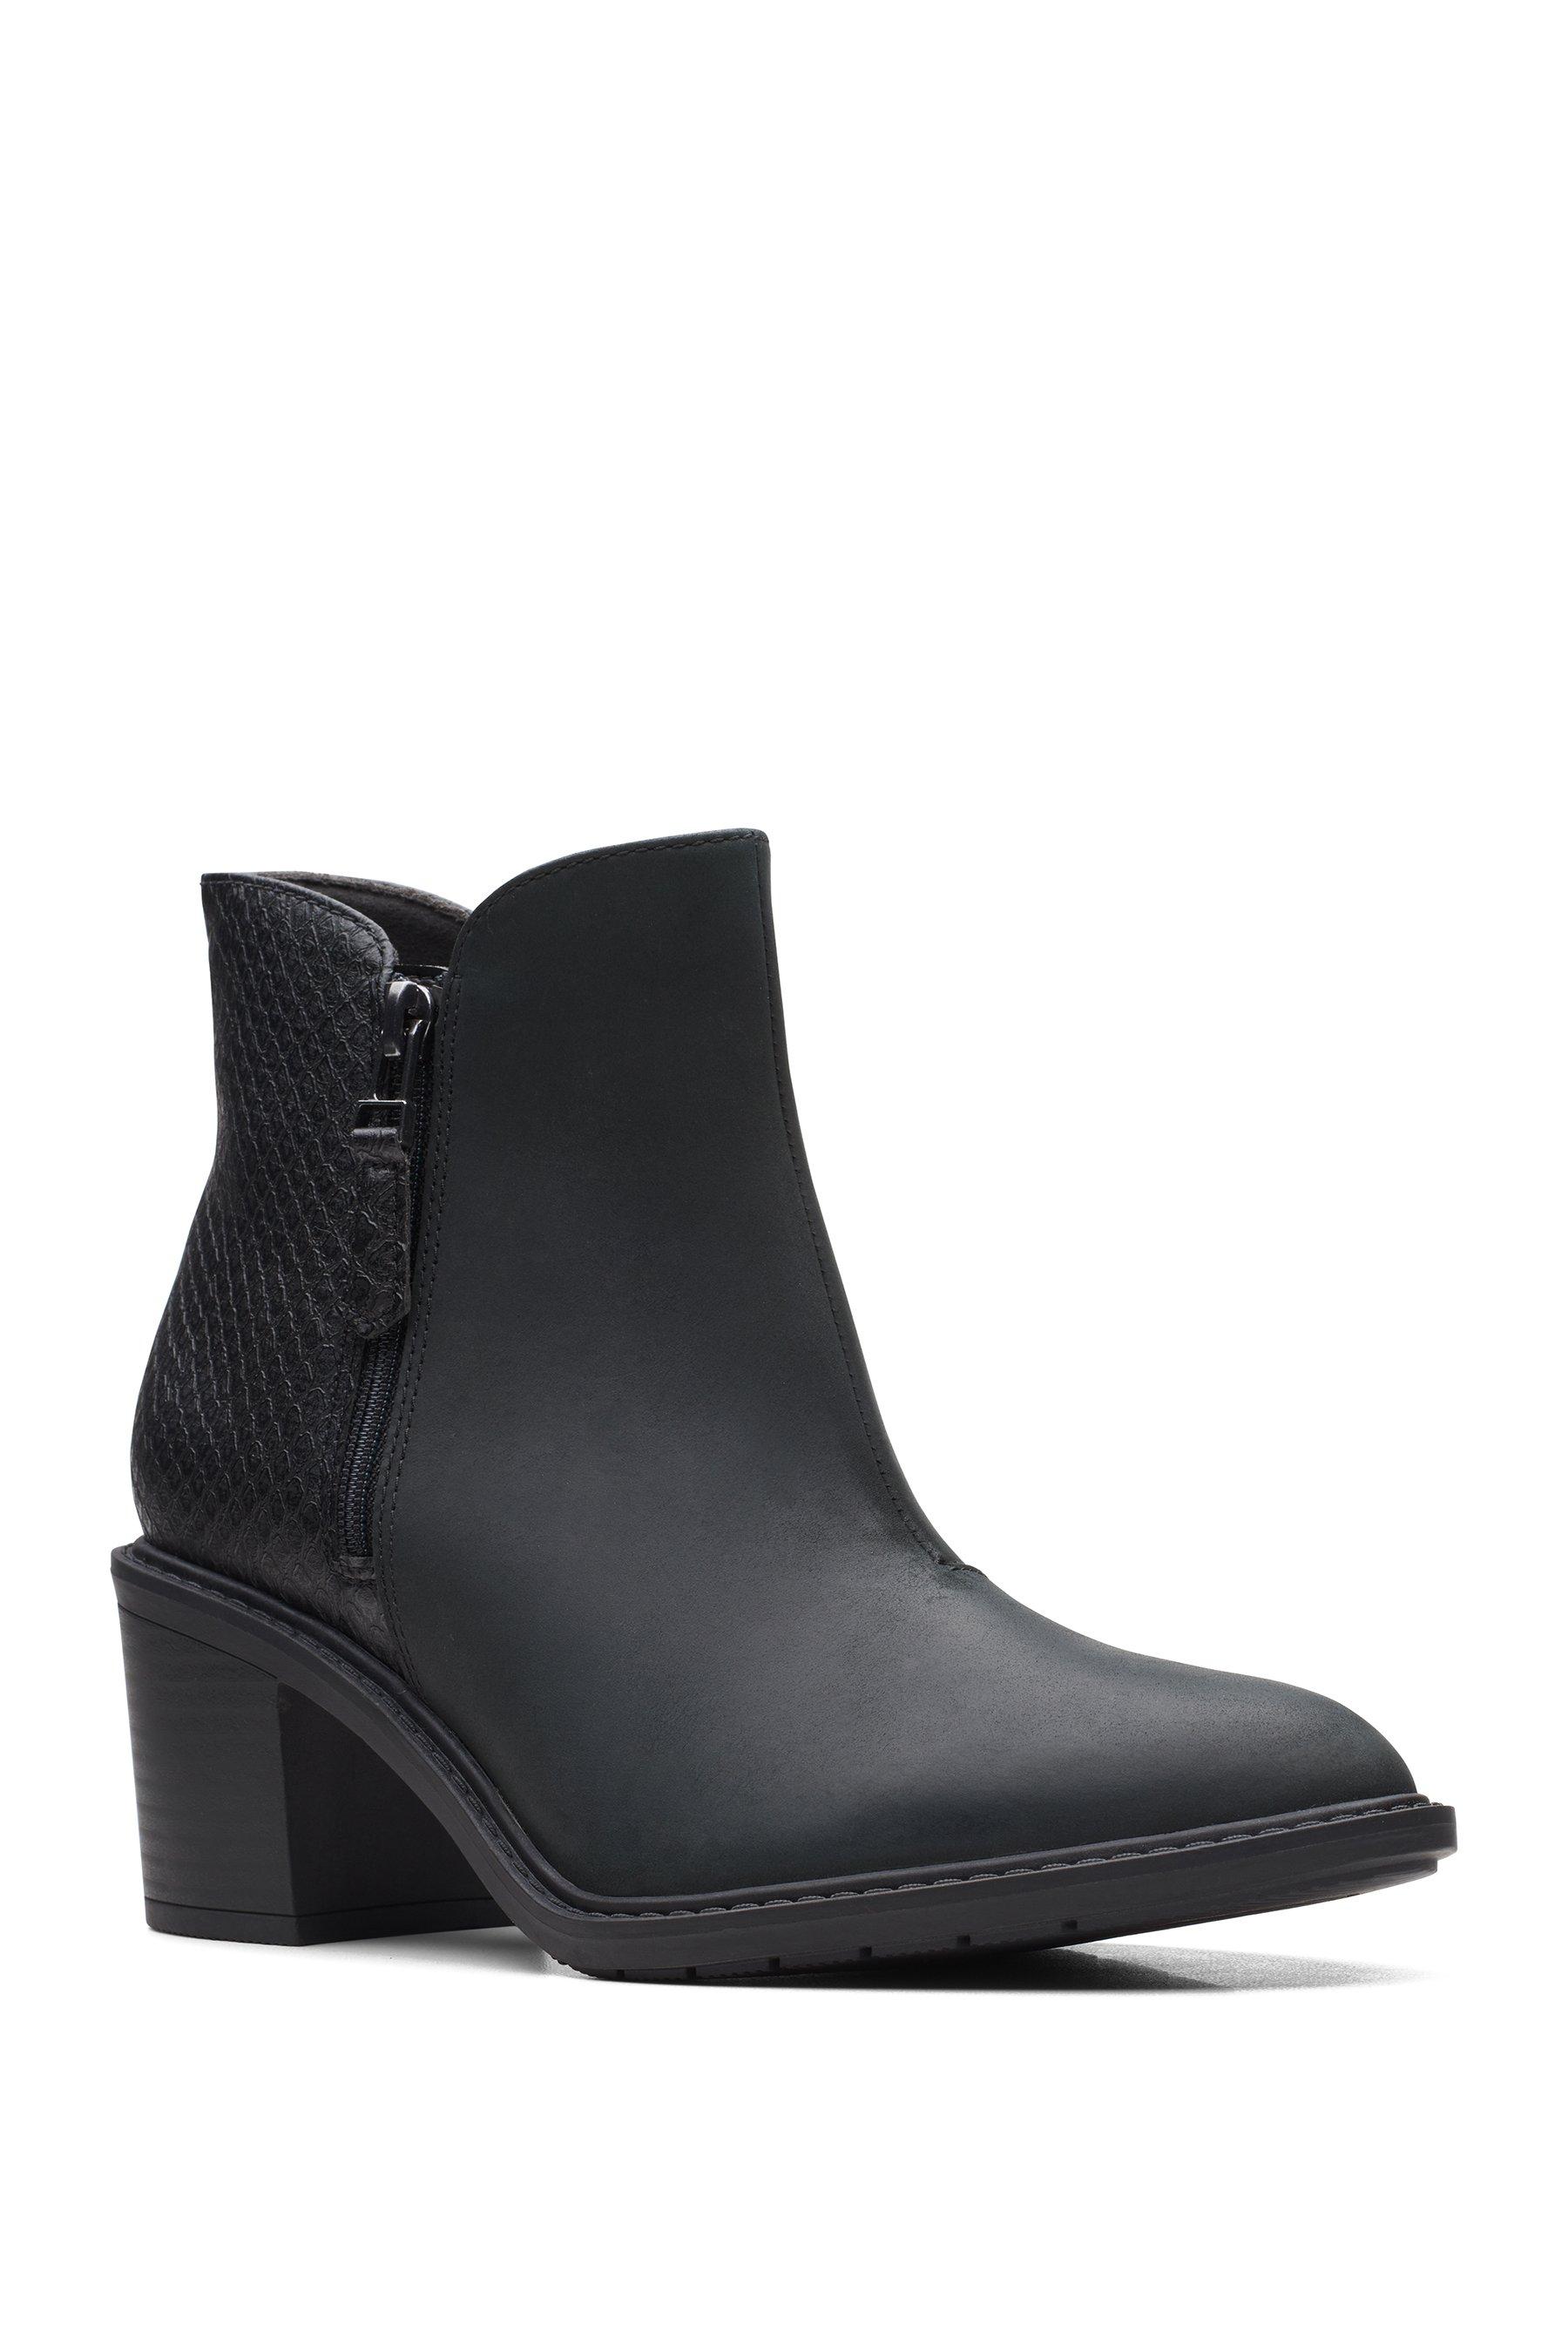 clarks scene black zip boots - womens - size: 4